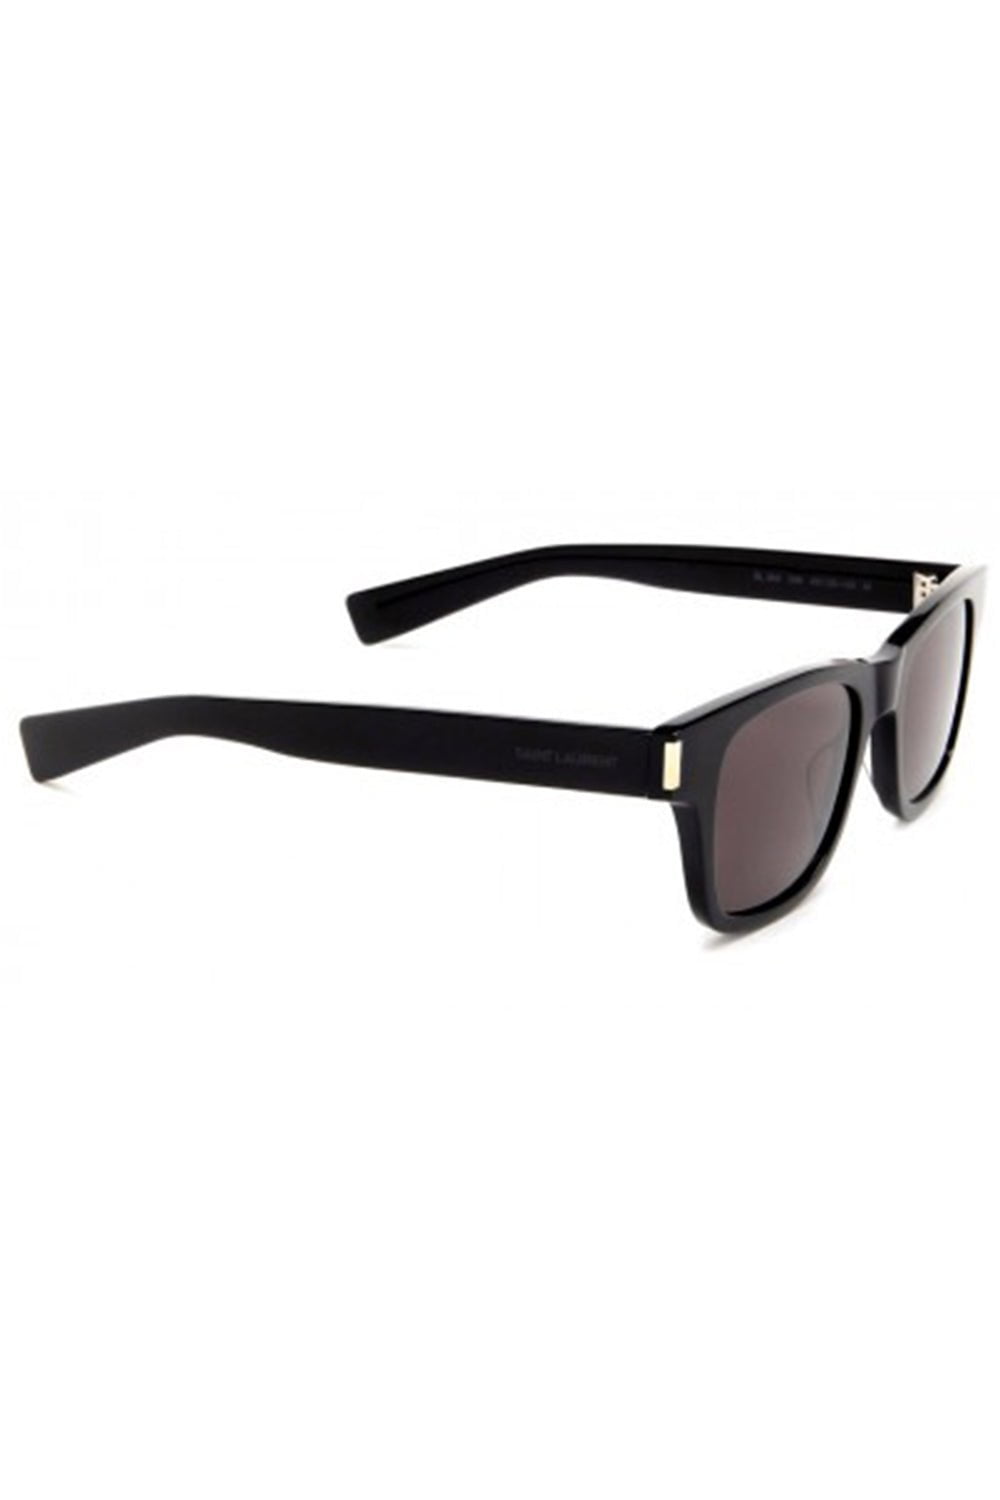 SAINT LAURENT-Square Sunglasses-BLACK/BLACK